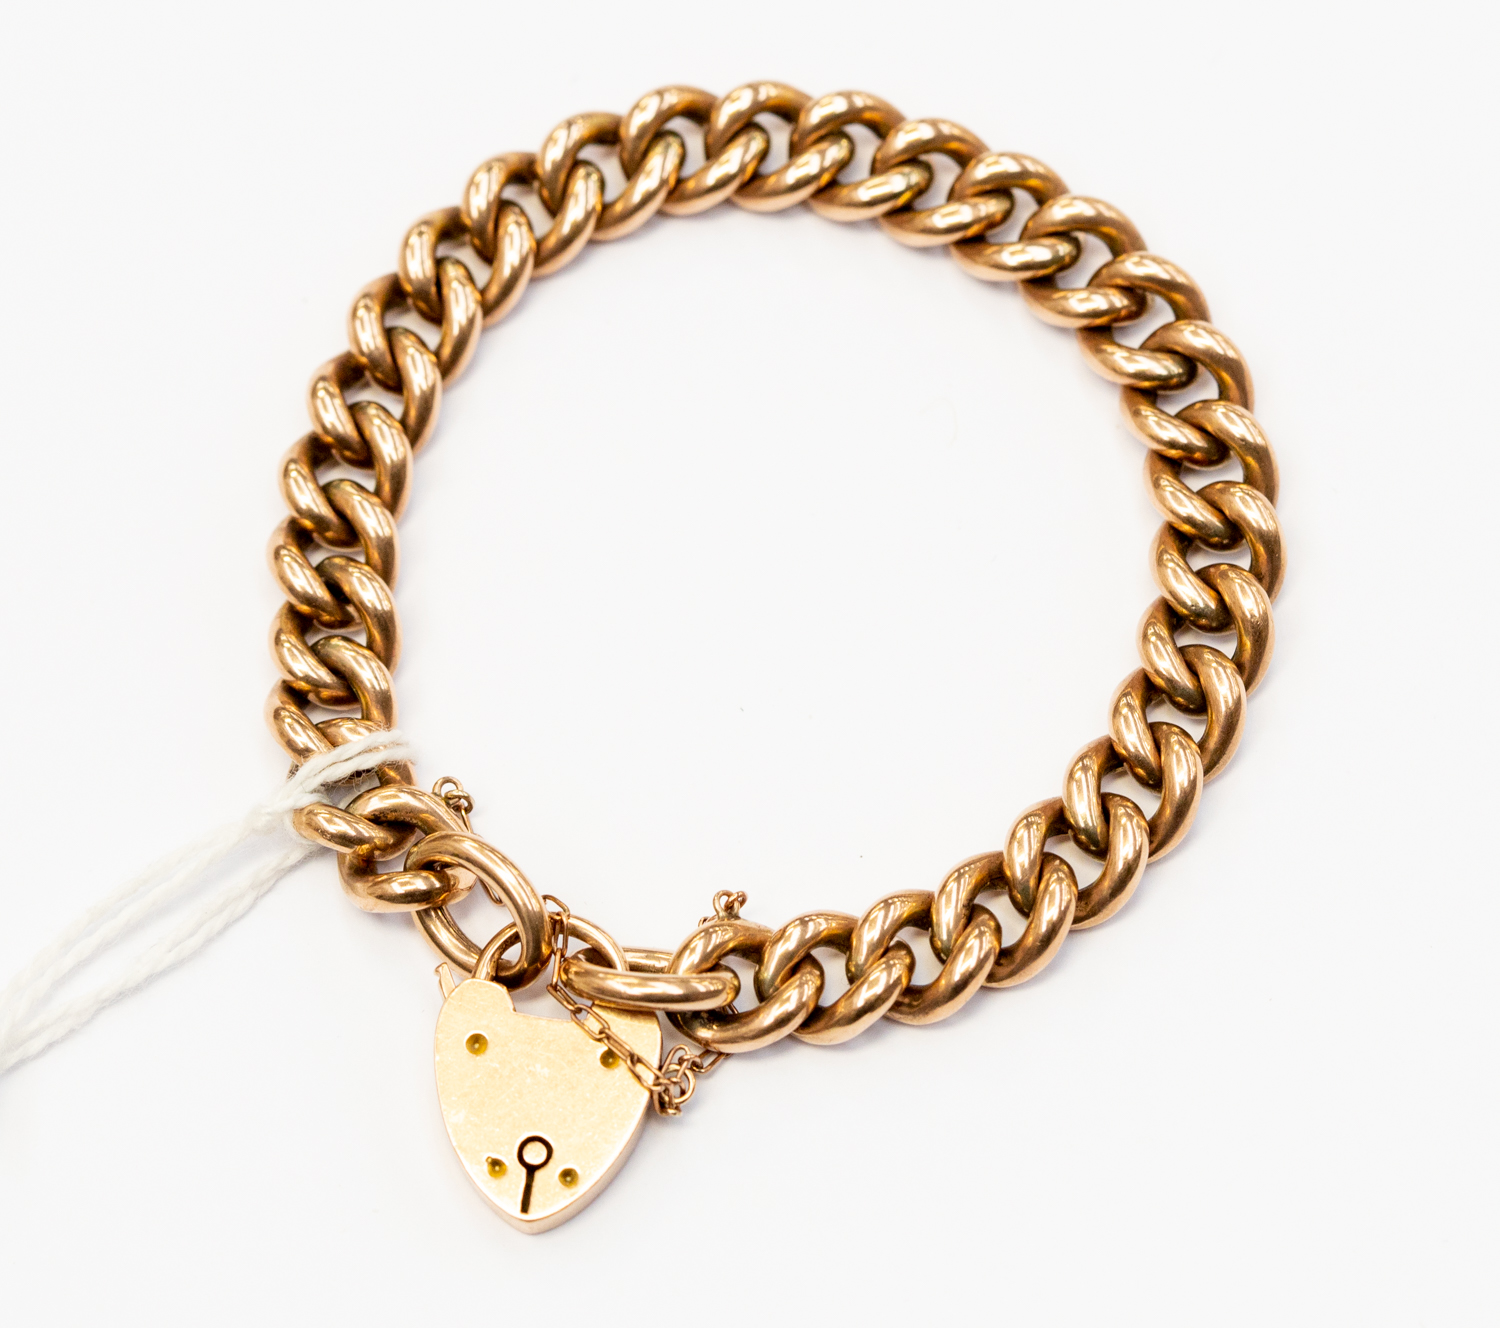 A 9 ct rose gold Albert bracelet, padlock clasp, total weight approx 22.